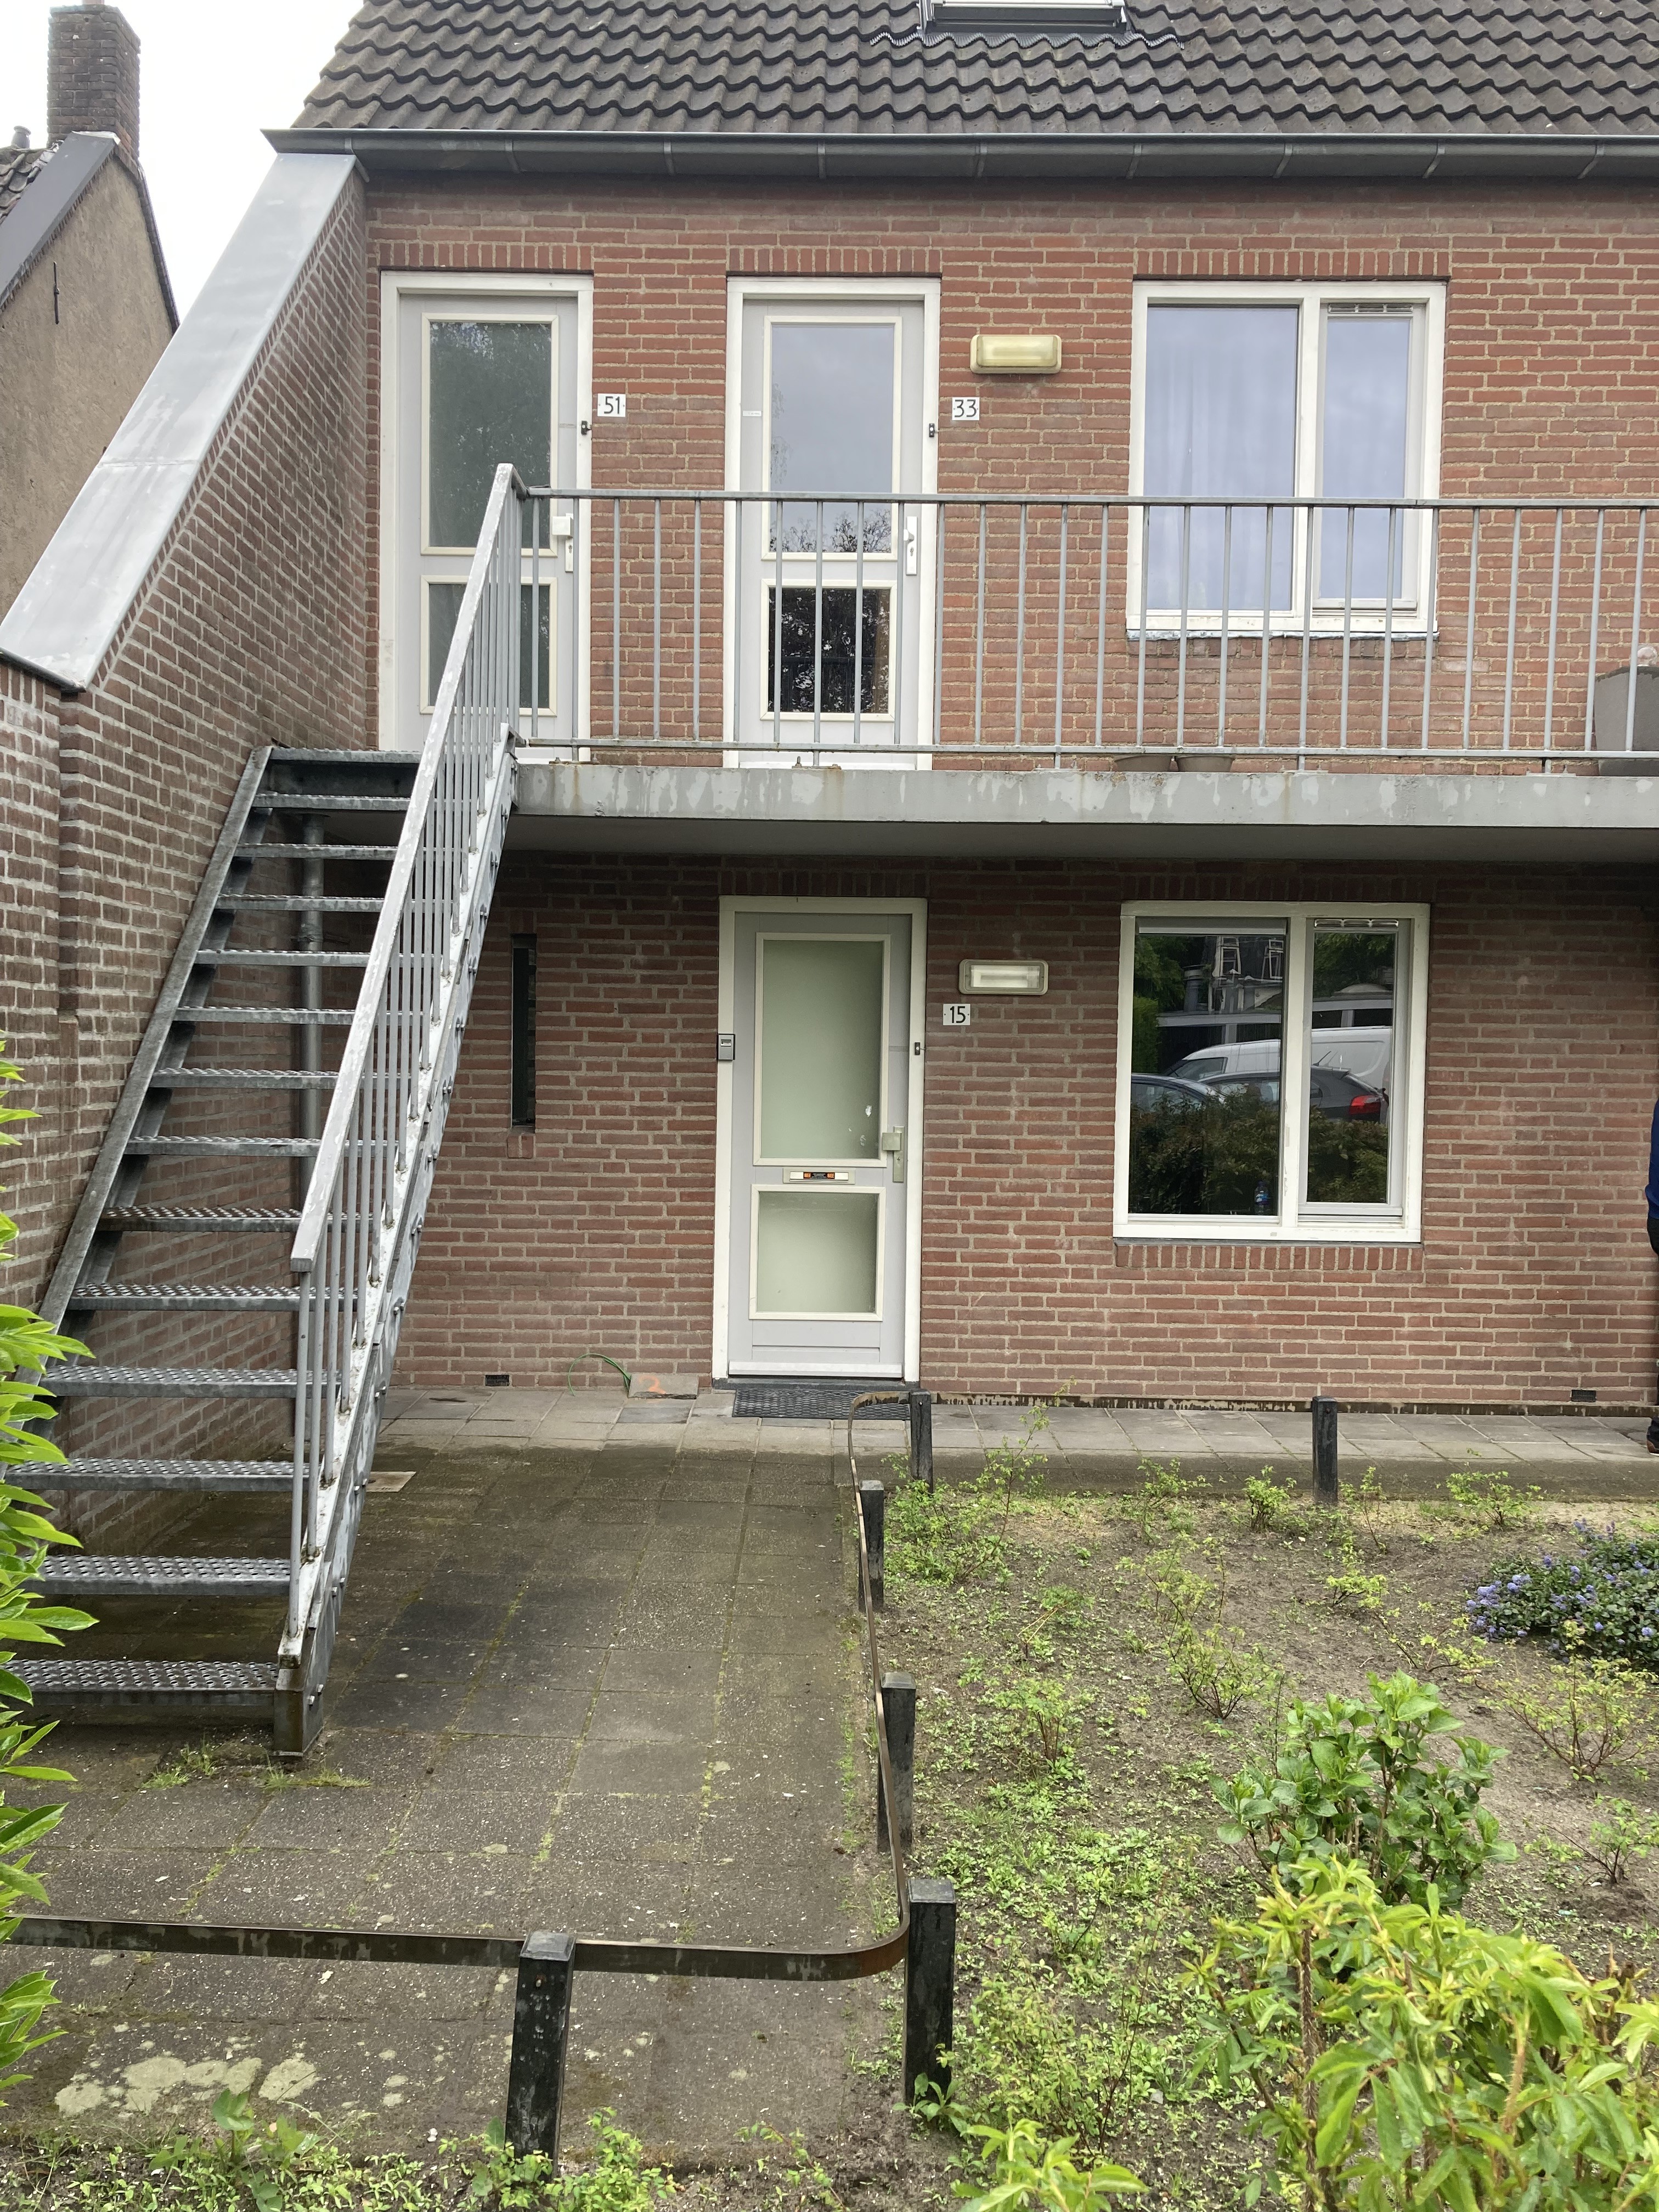 Dwarsstraat 15, 5051 RA Goirle, Nederland